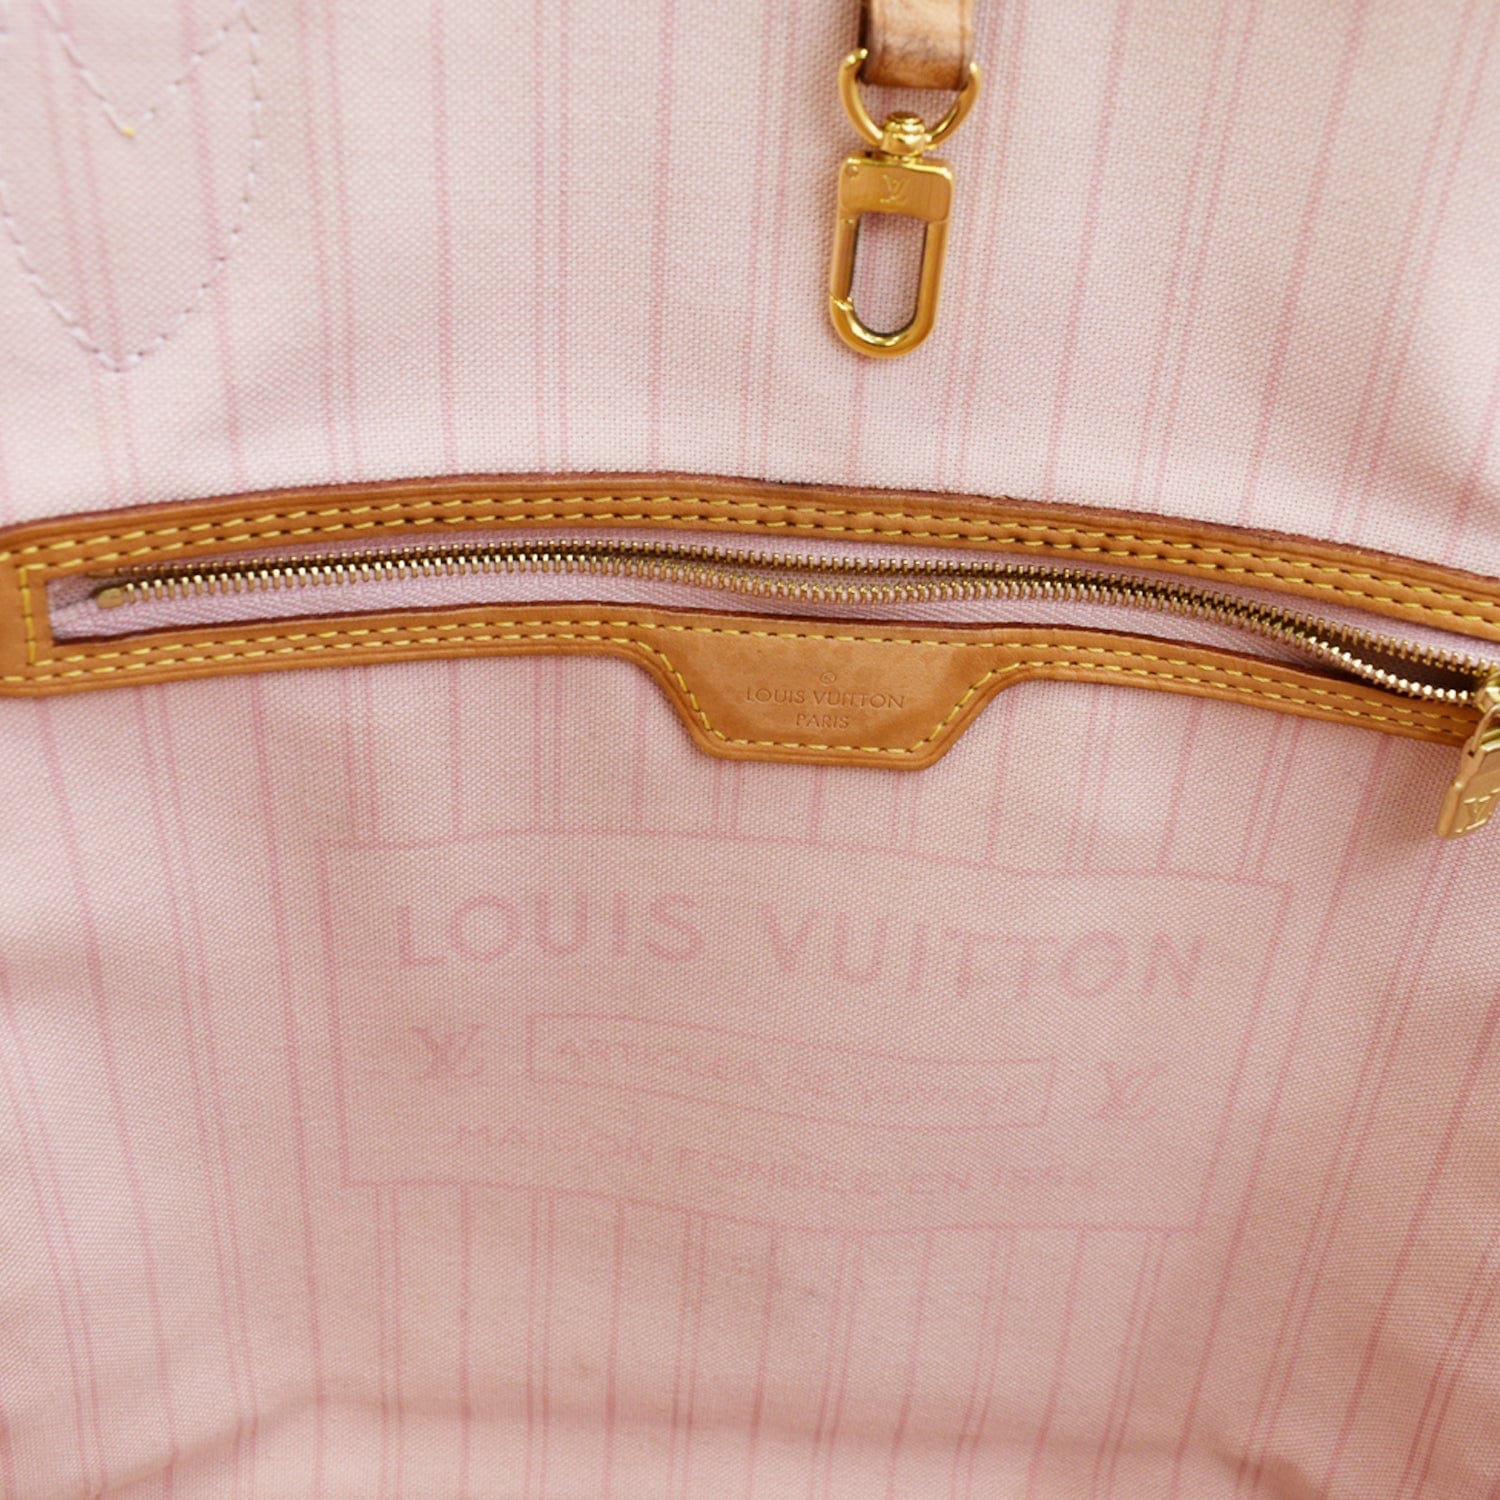 2018 Louis Vuitton Damier Azur Neverfull MM Tote Bag Rose